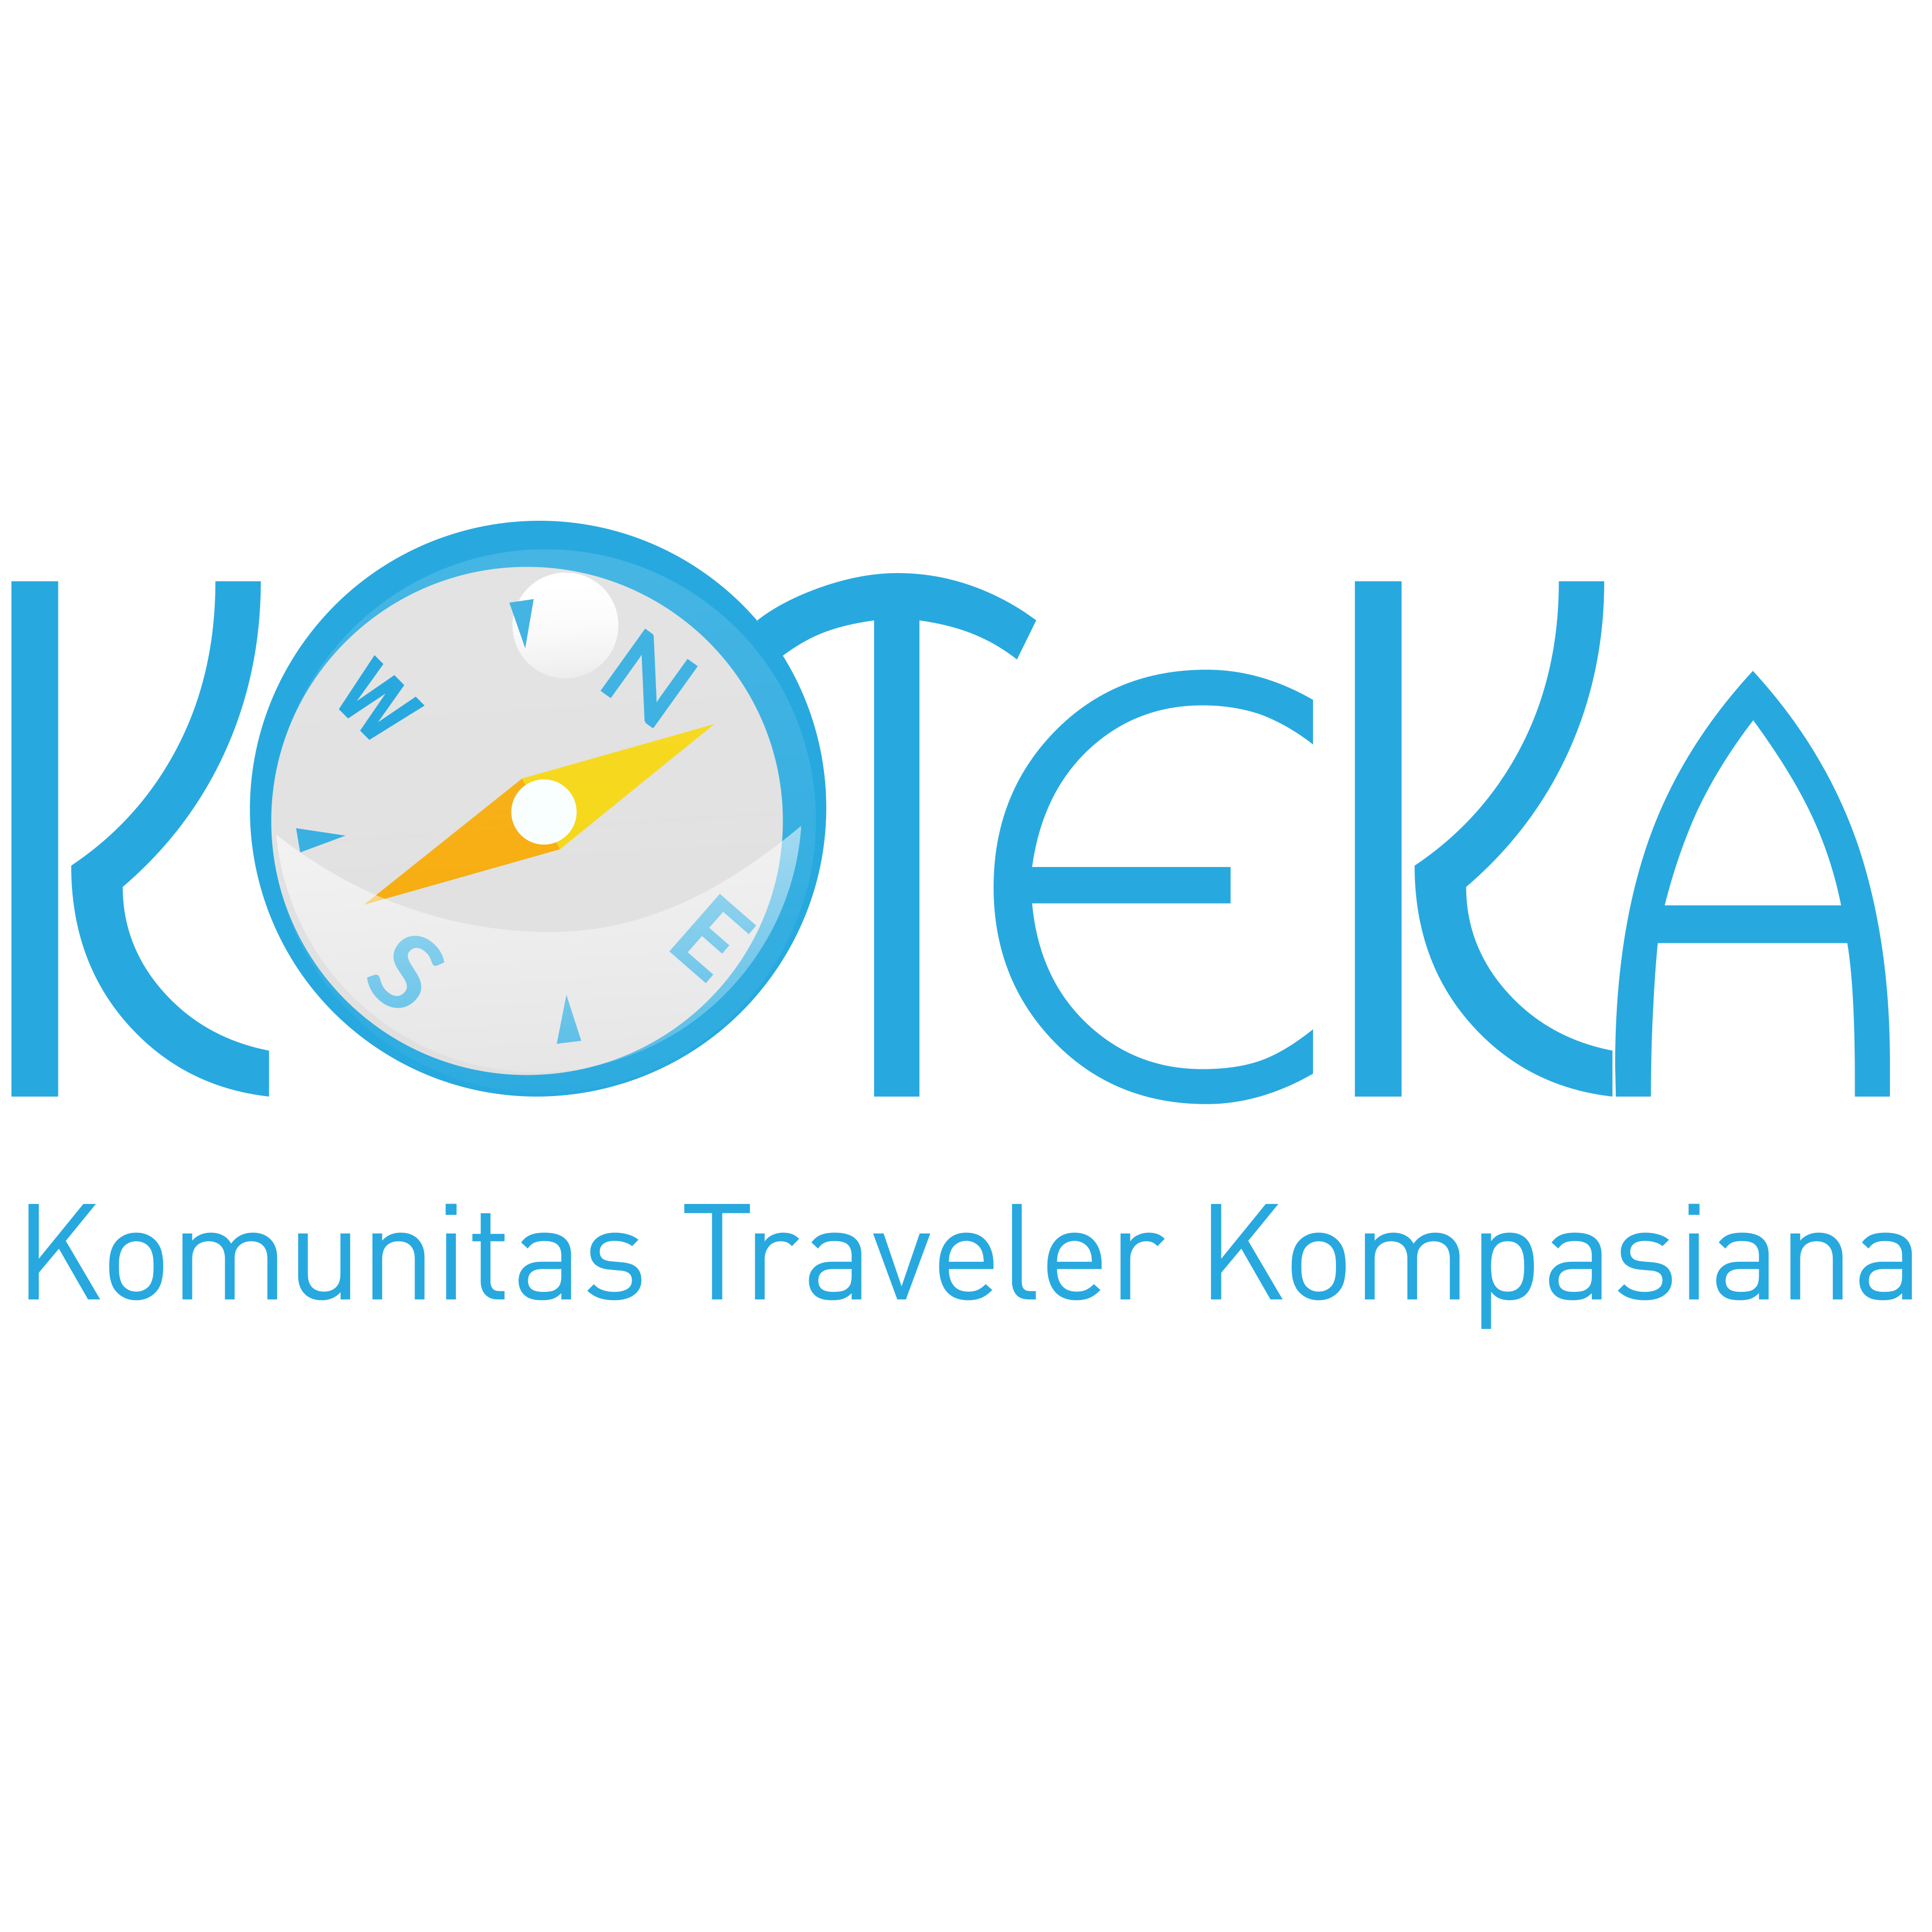 Kompasiana Awards Winner 2021 - BEST COMMUNITY - KOTeKA (Komunitas Traveler Kompasiana)